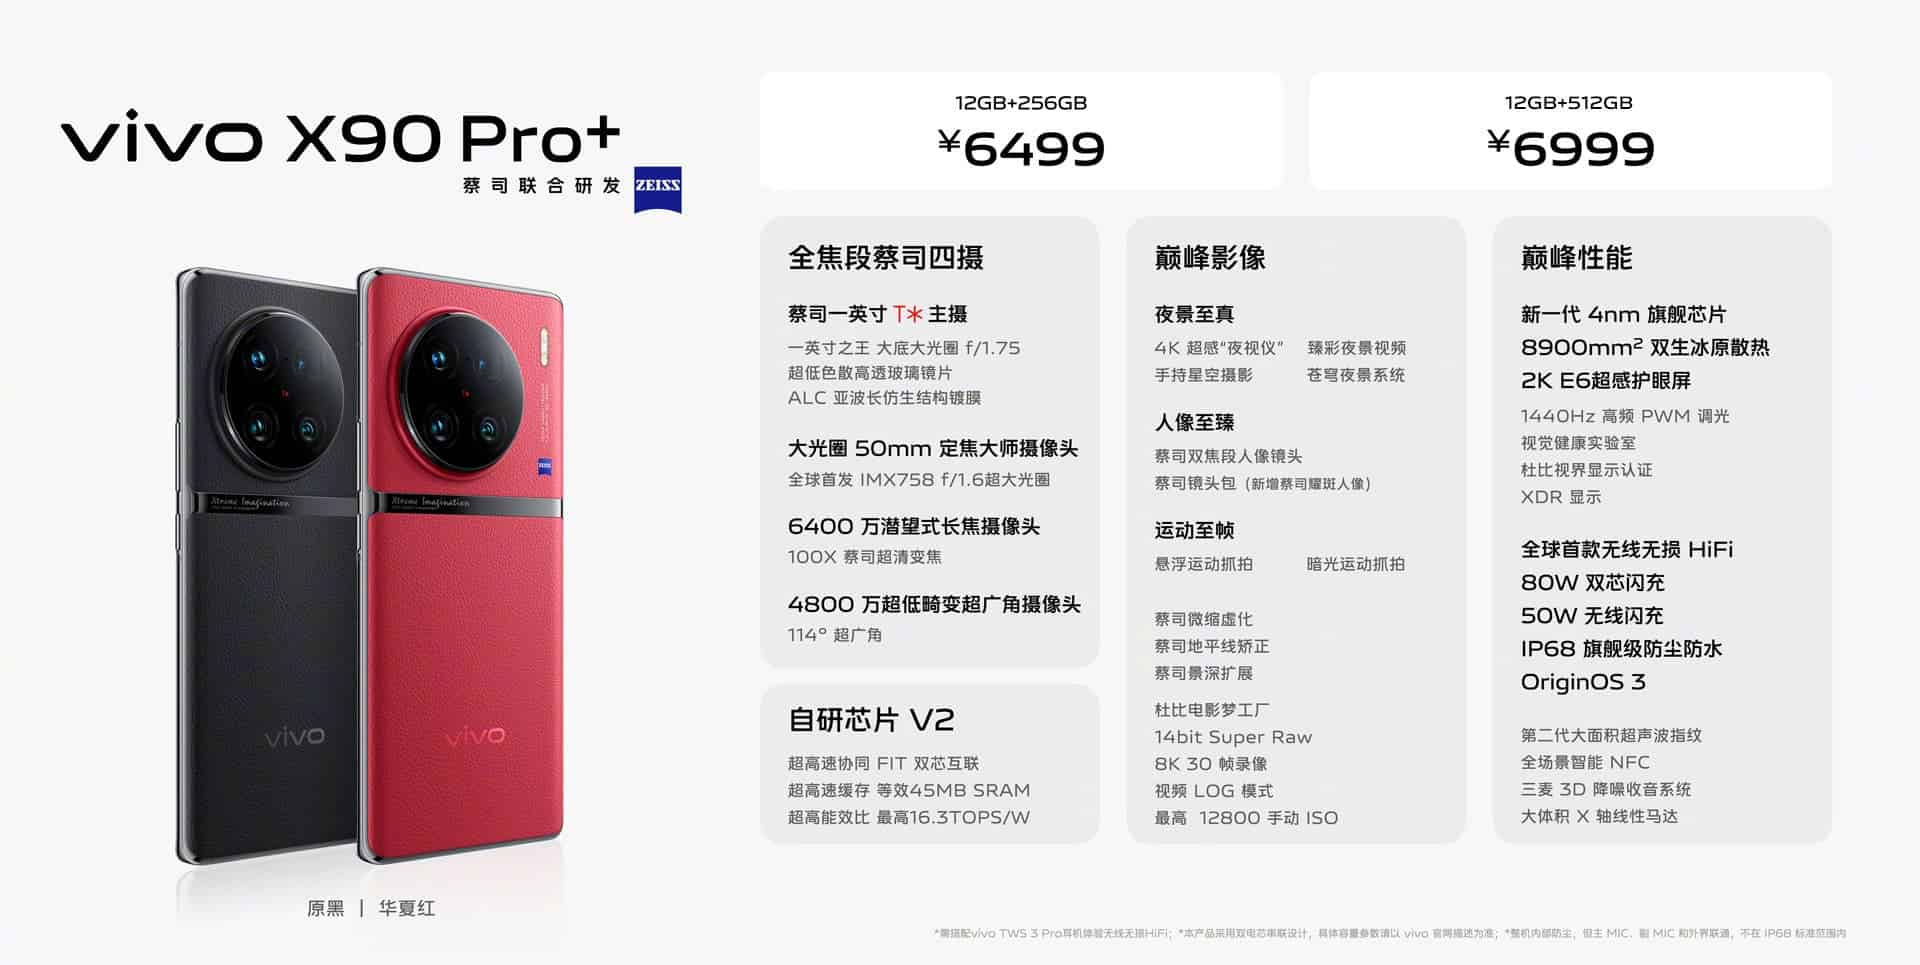 VIVO X90 Pro+ Price